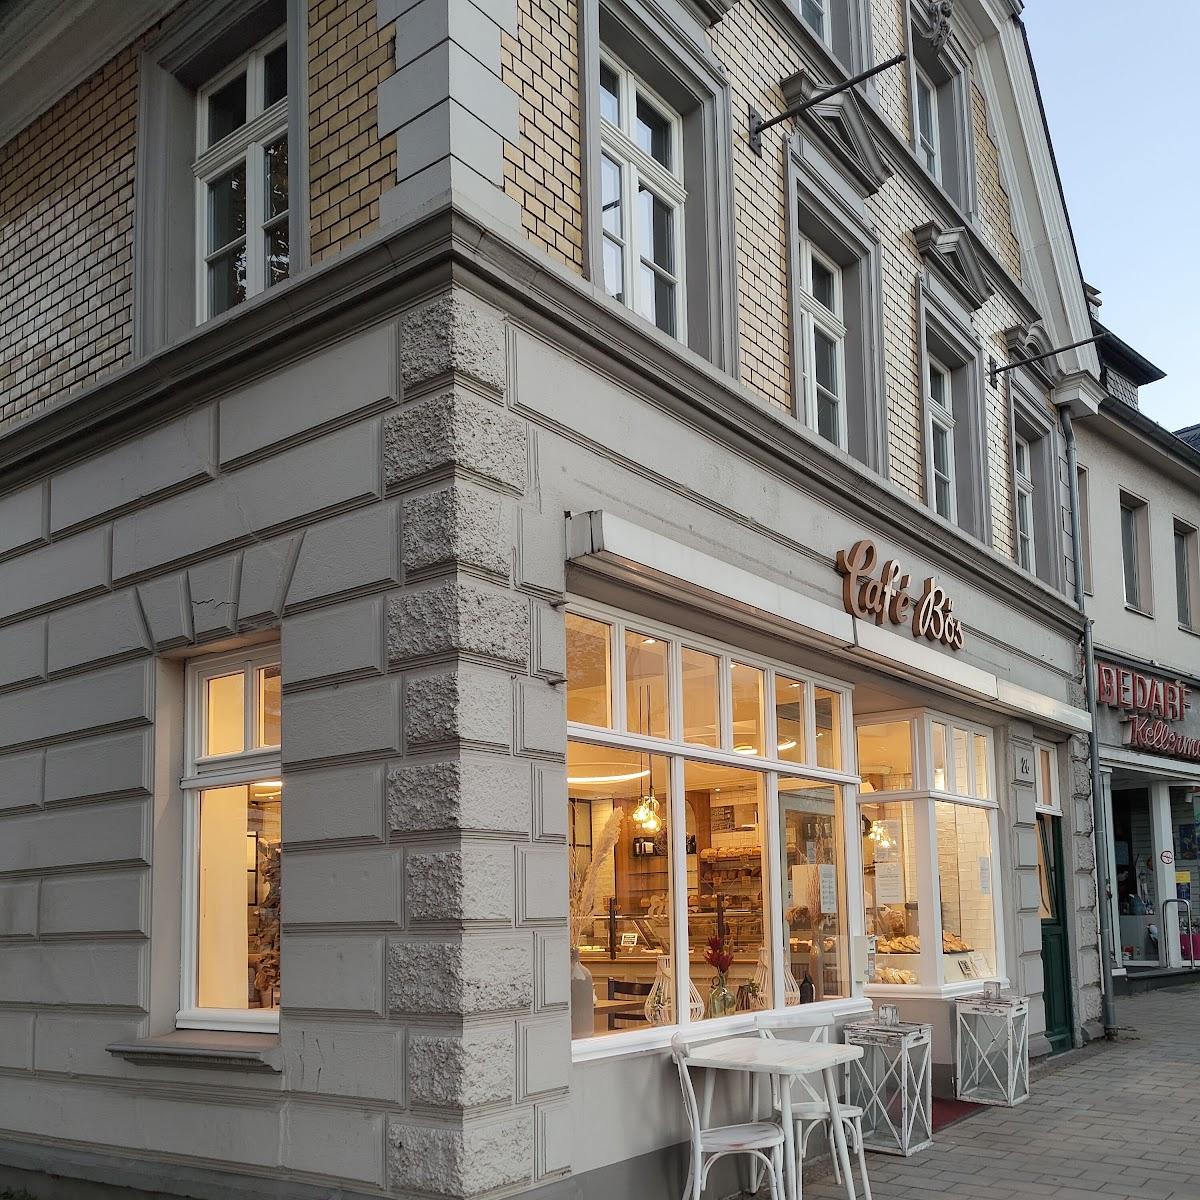 Restaurant "Café & Konditorei Bös" in Ratingen